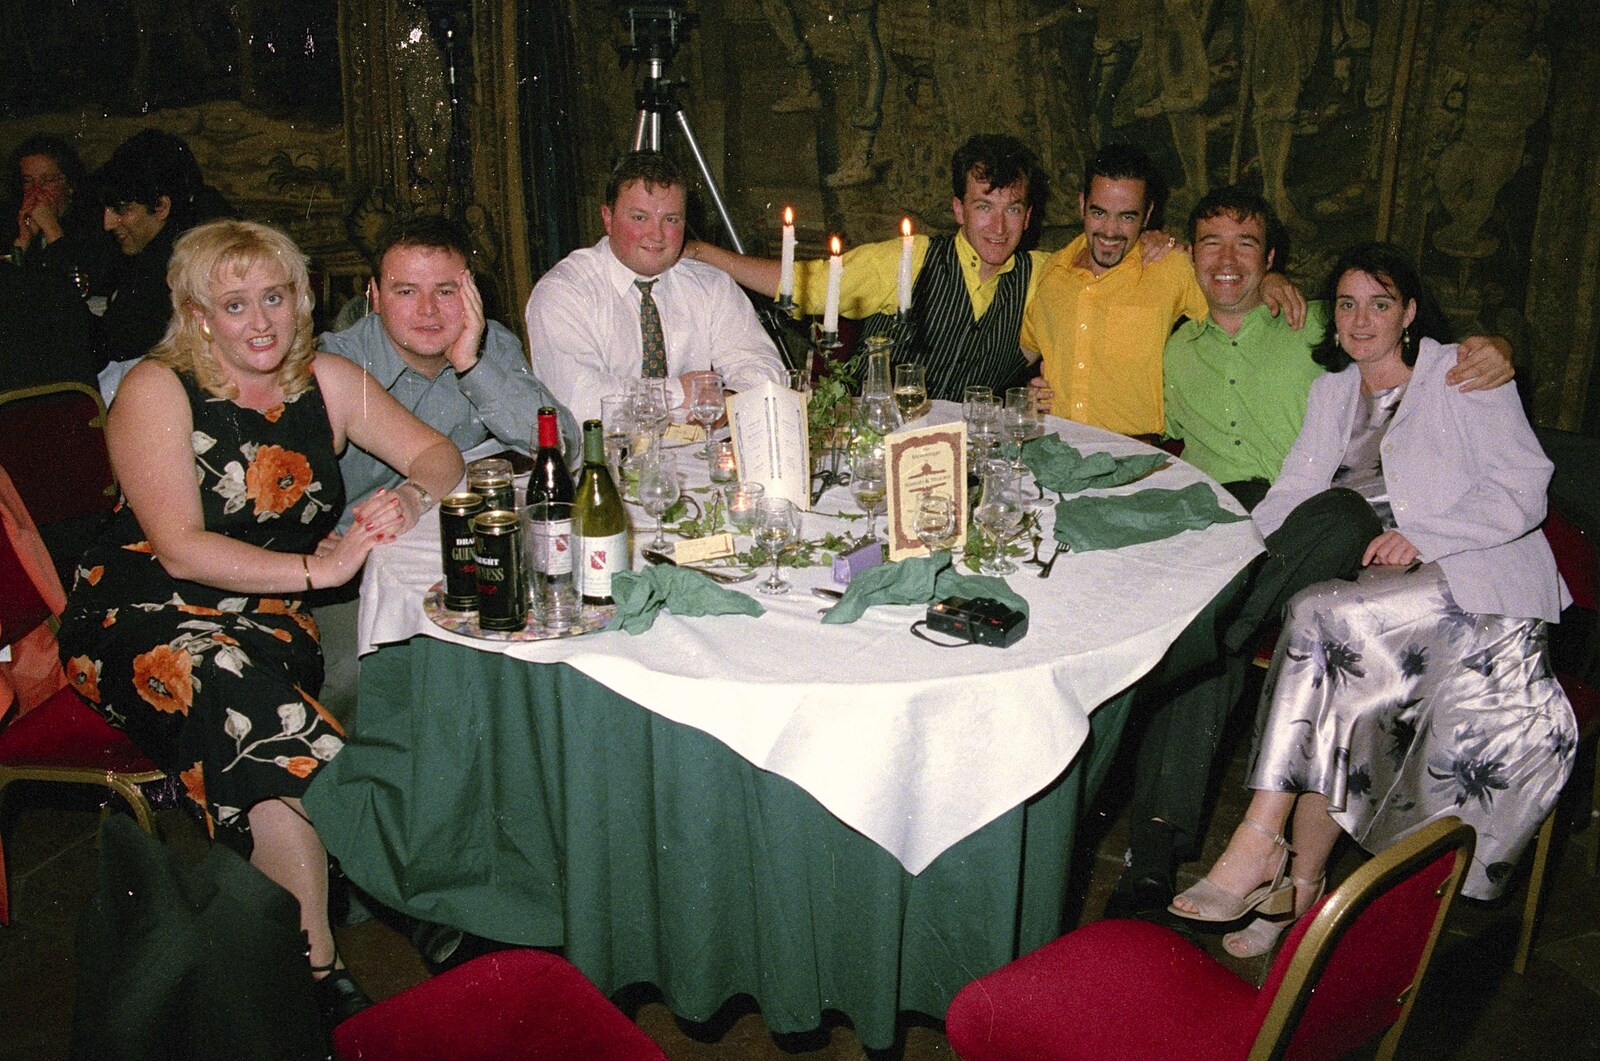 Stuart and Sarah's CISU Wedding, Naworth Castle, Brampton, Cumbria - 21st September 1996: Sean, Foxy, Phil, Trev, Tim and Gail